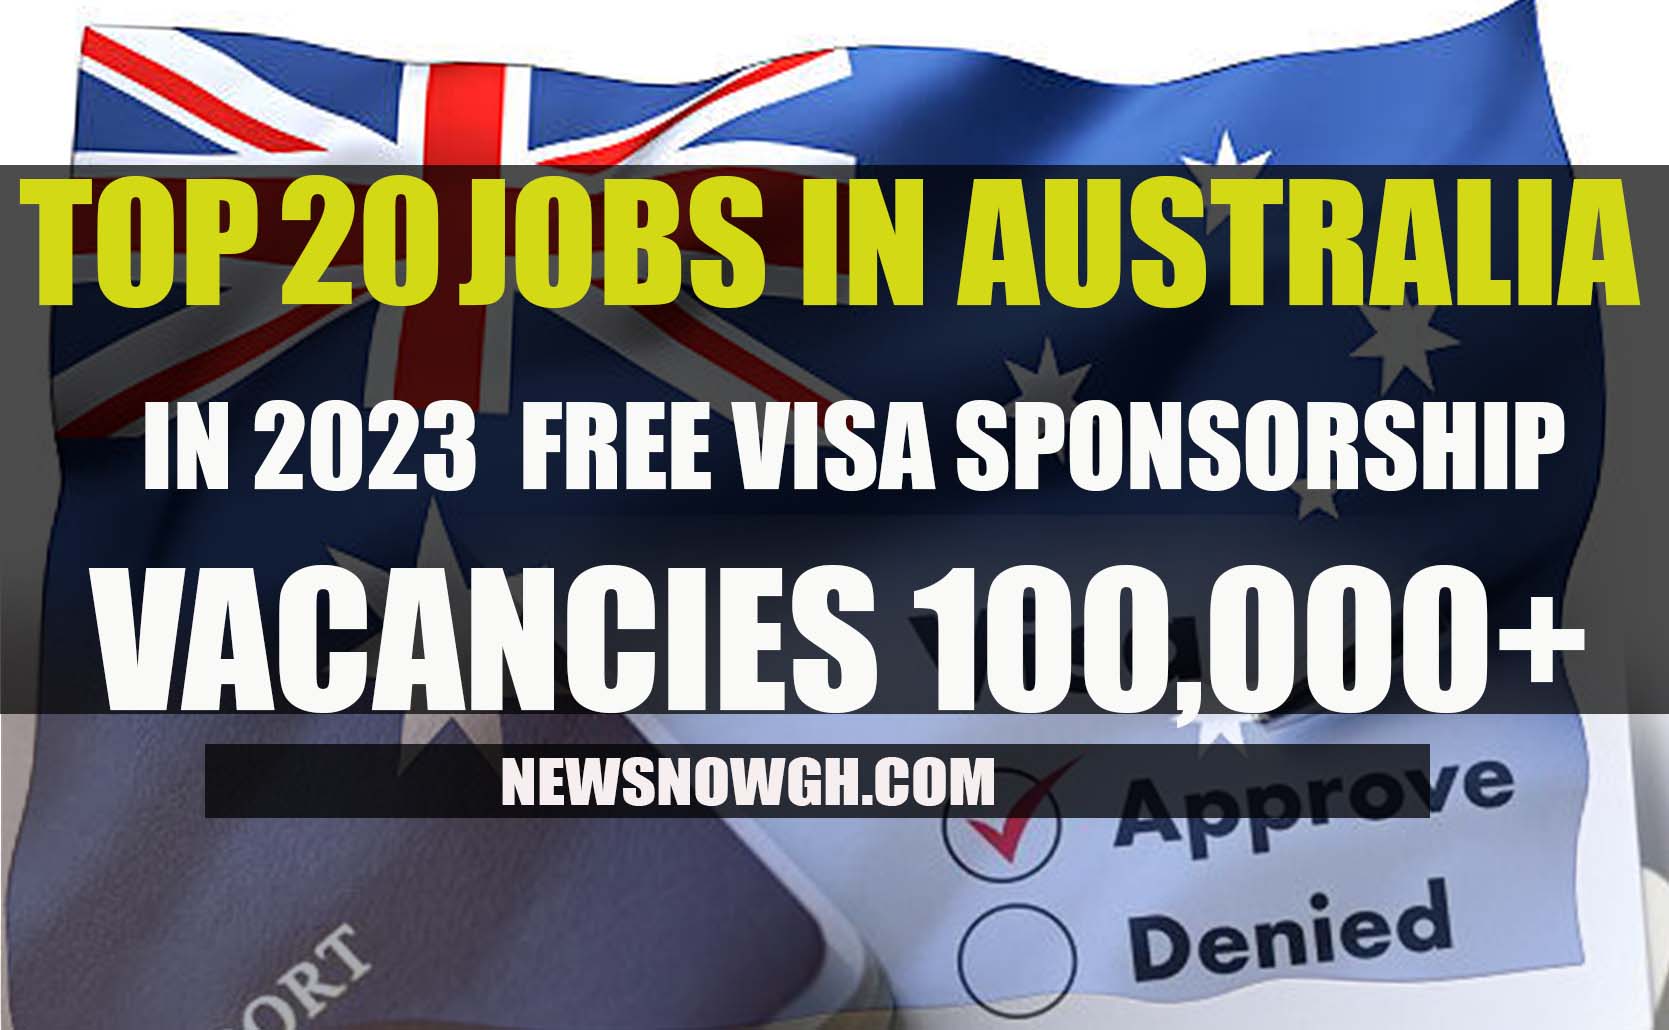 visit australia jobs